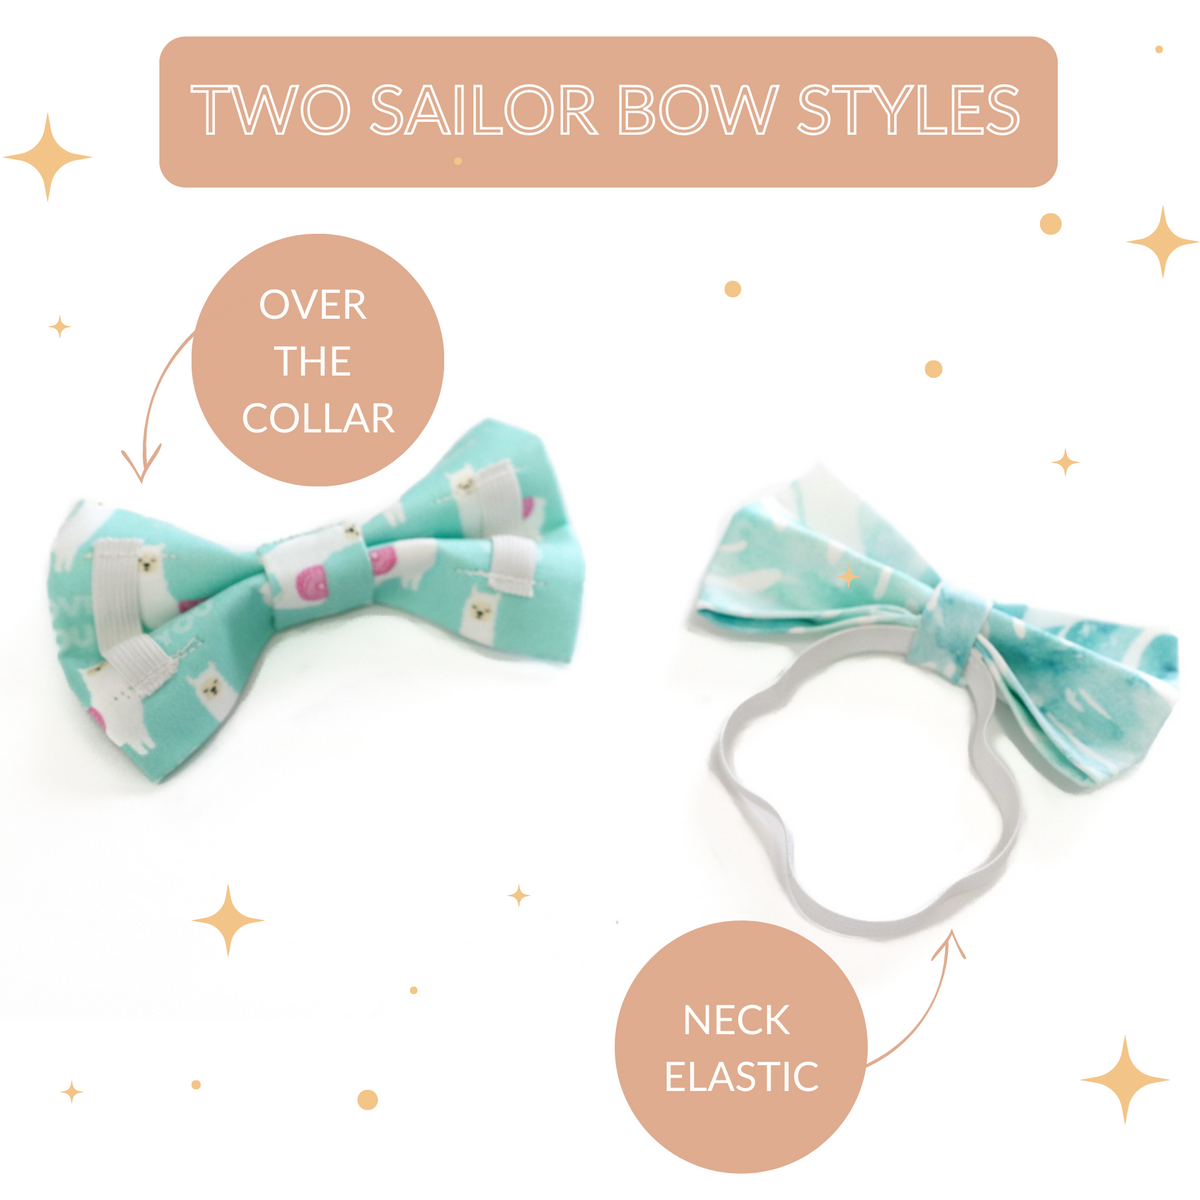 over the collar dog sailor bow or neck elastic dog sailor bow